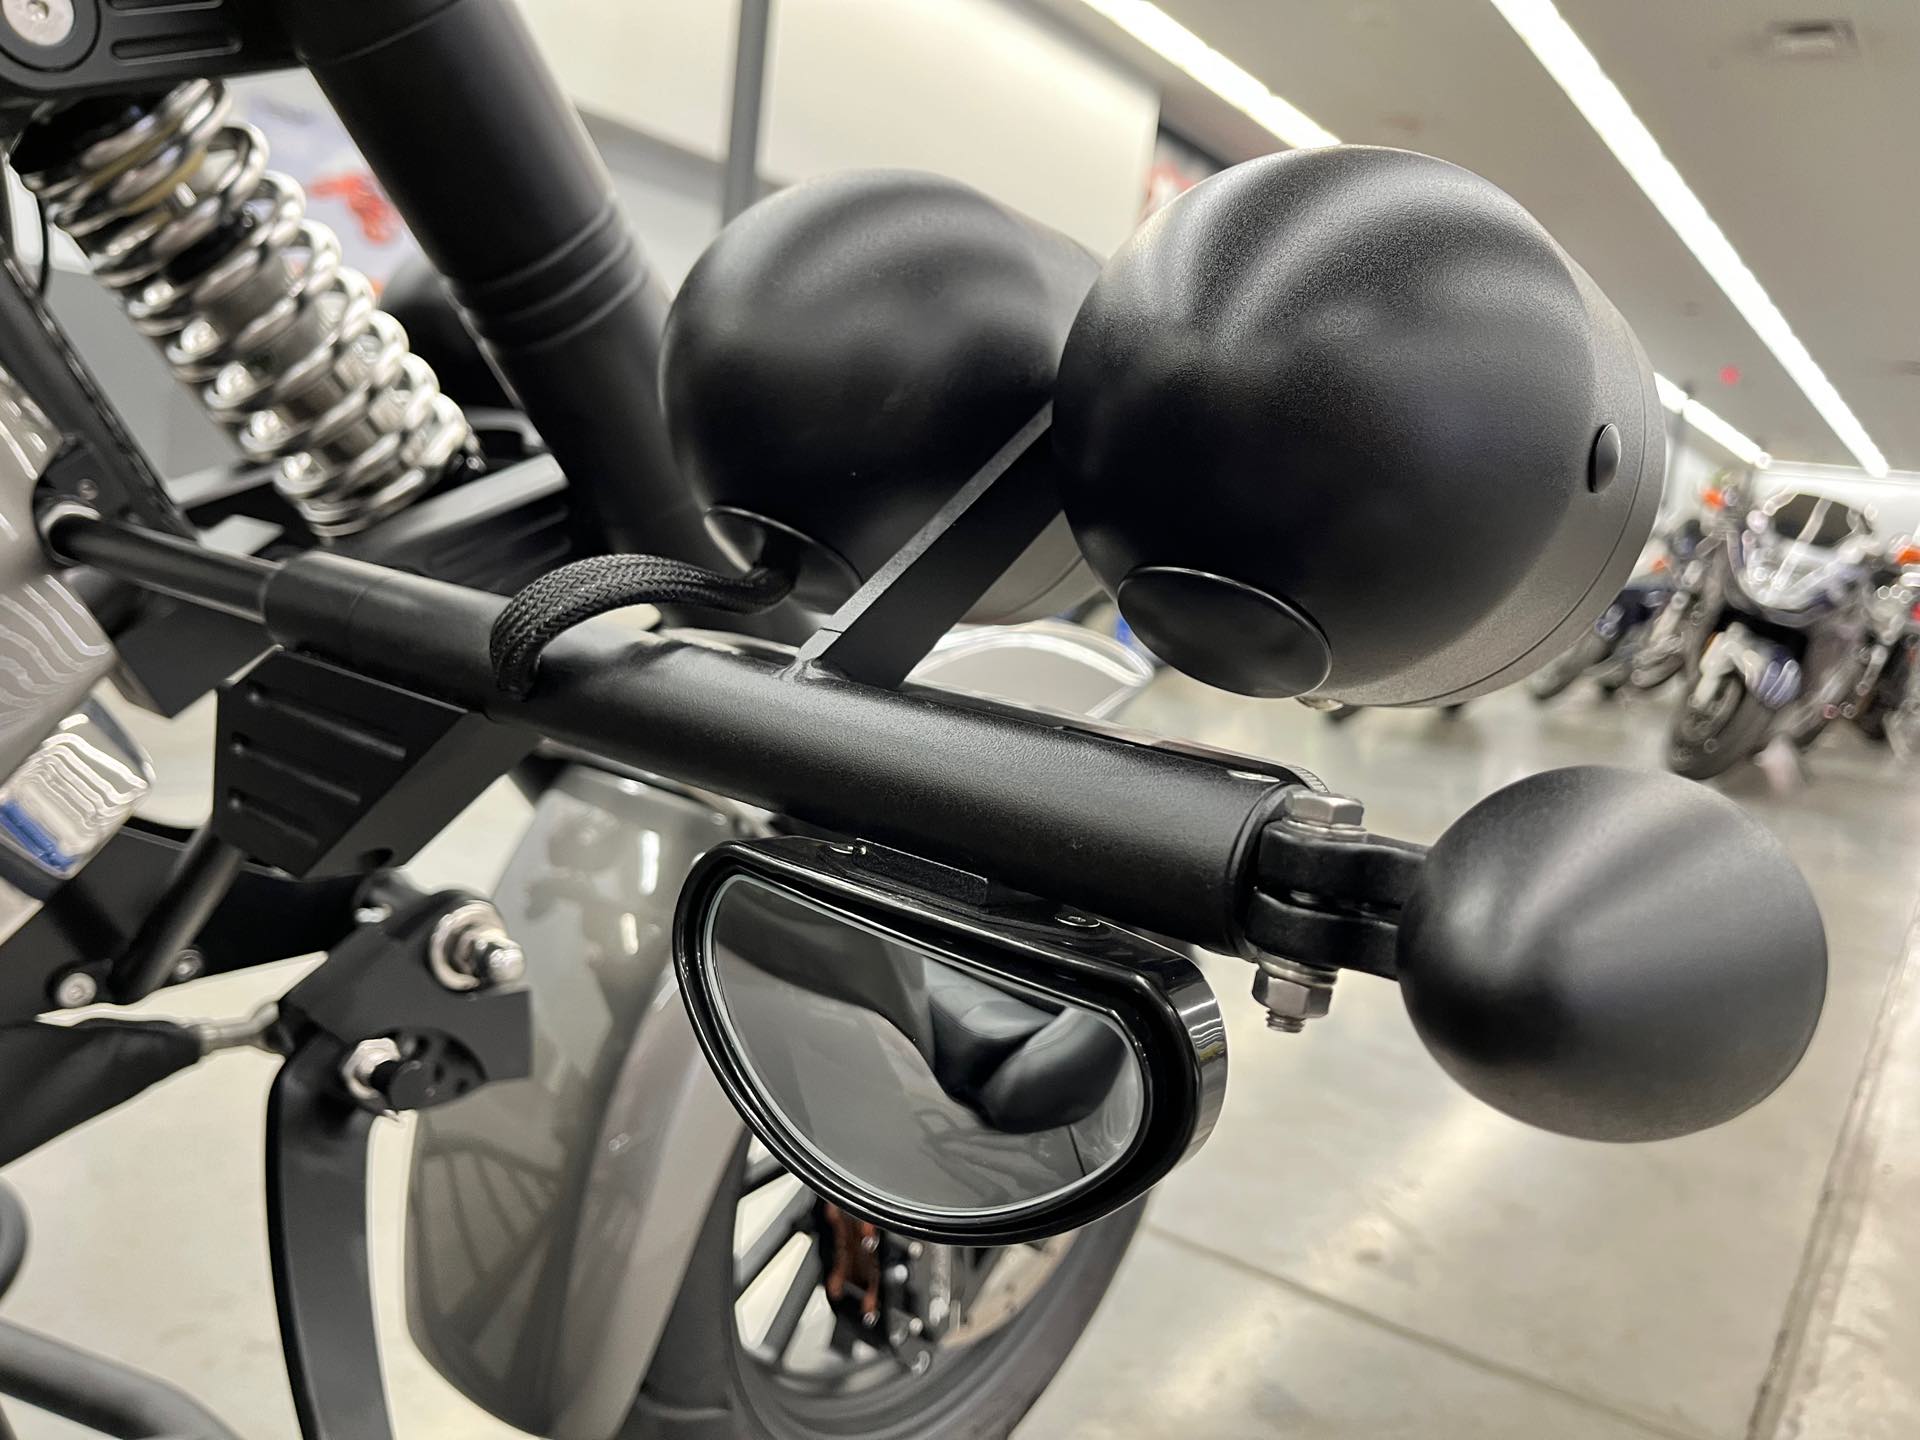 2022 REWACO GT-2 Turbo w Blackline  Dynamic pkg at Aces Motorcycles - Denver